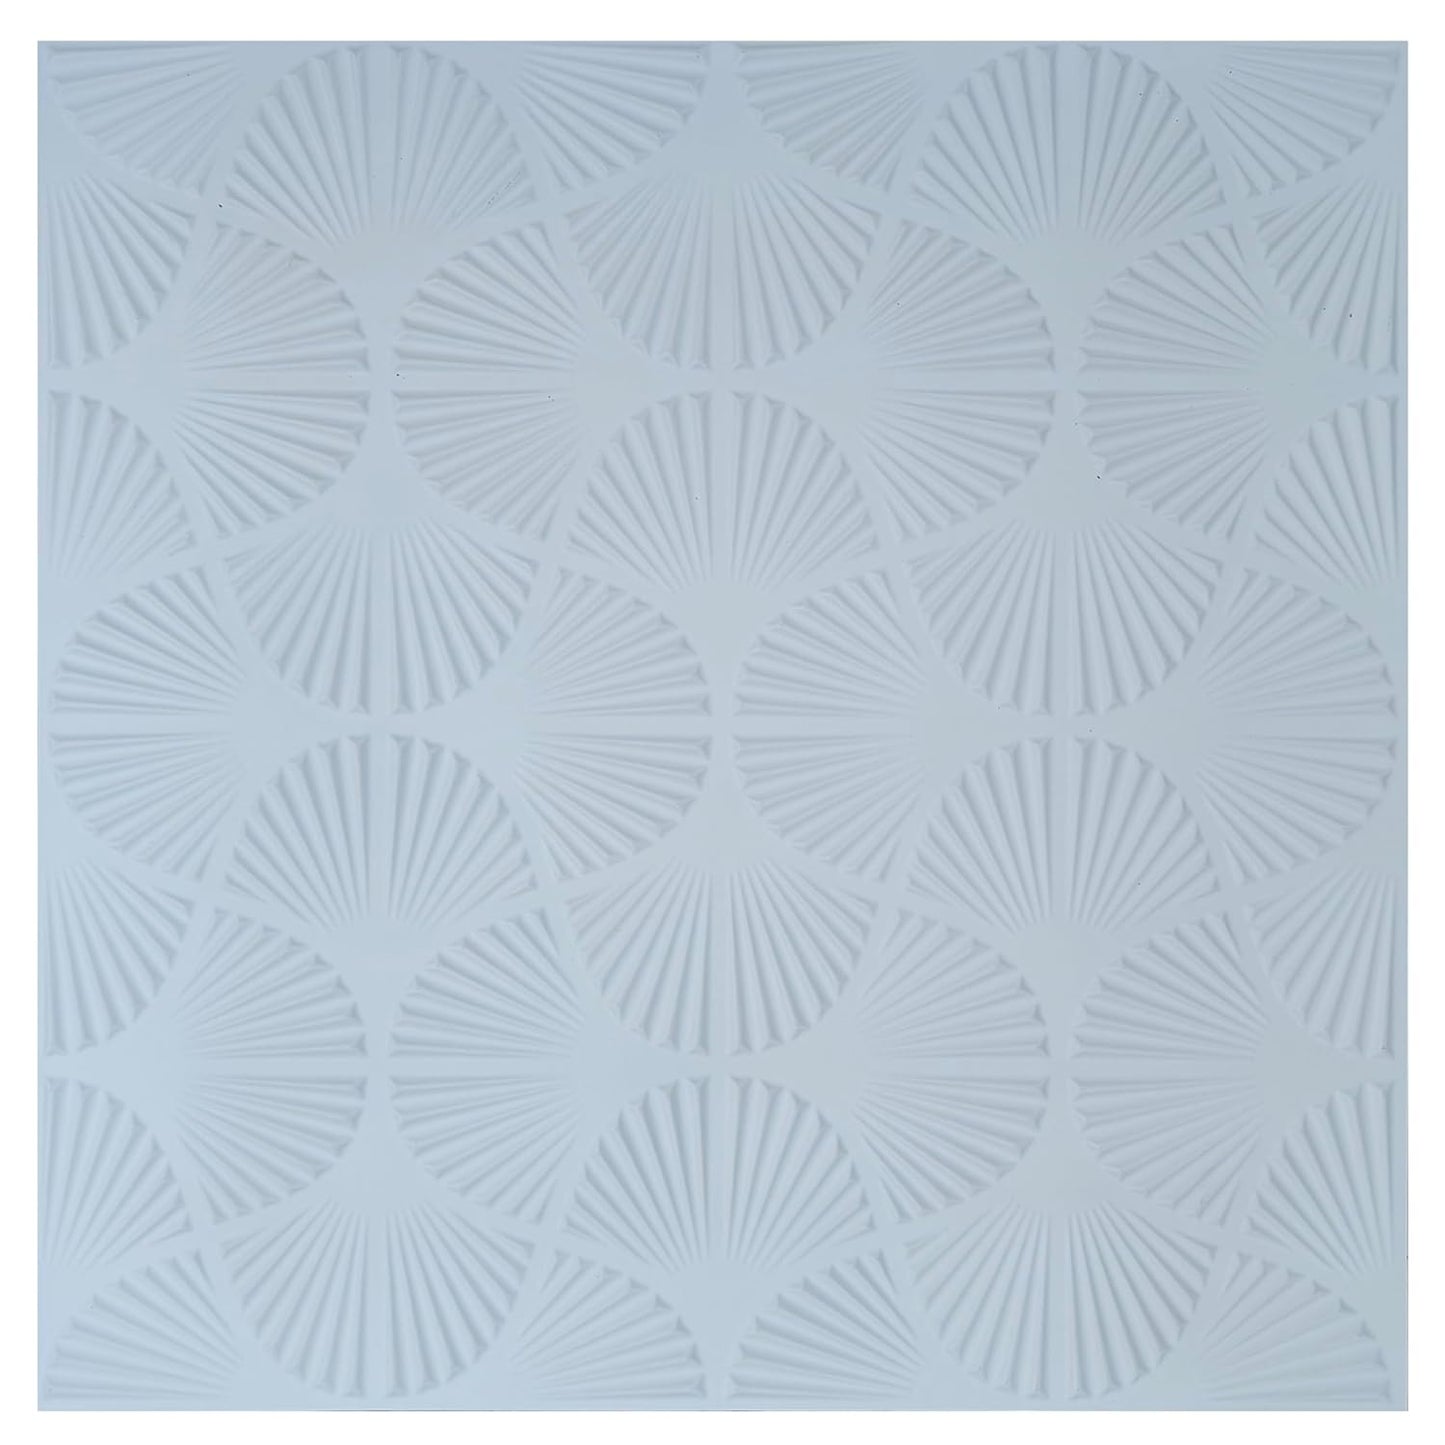 Kayra Decor 3D Self Adhesive Wall Panel -White Hand Fan Design - (Size 50 x 50 CM)